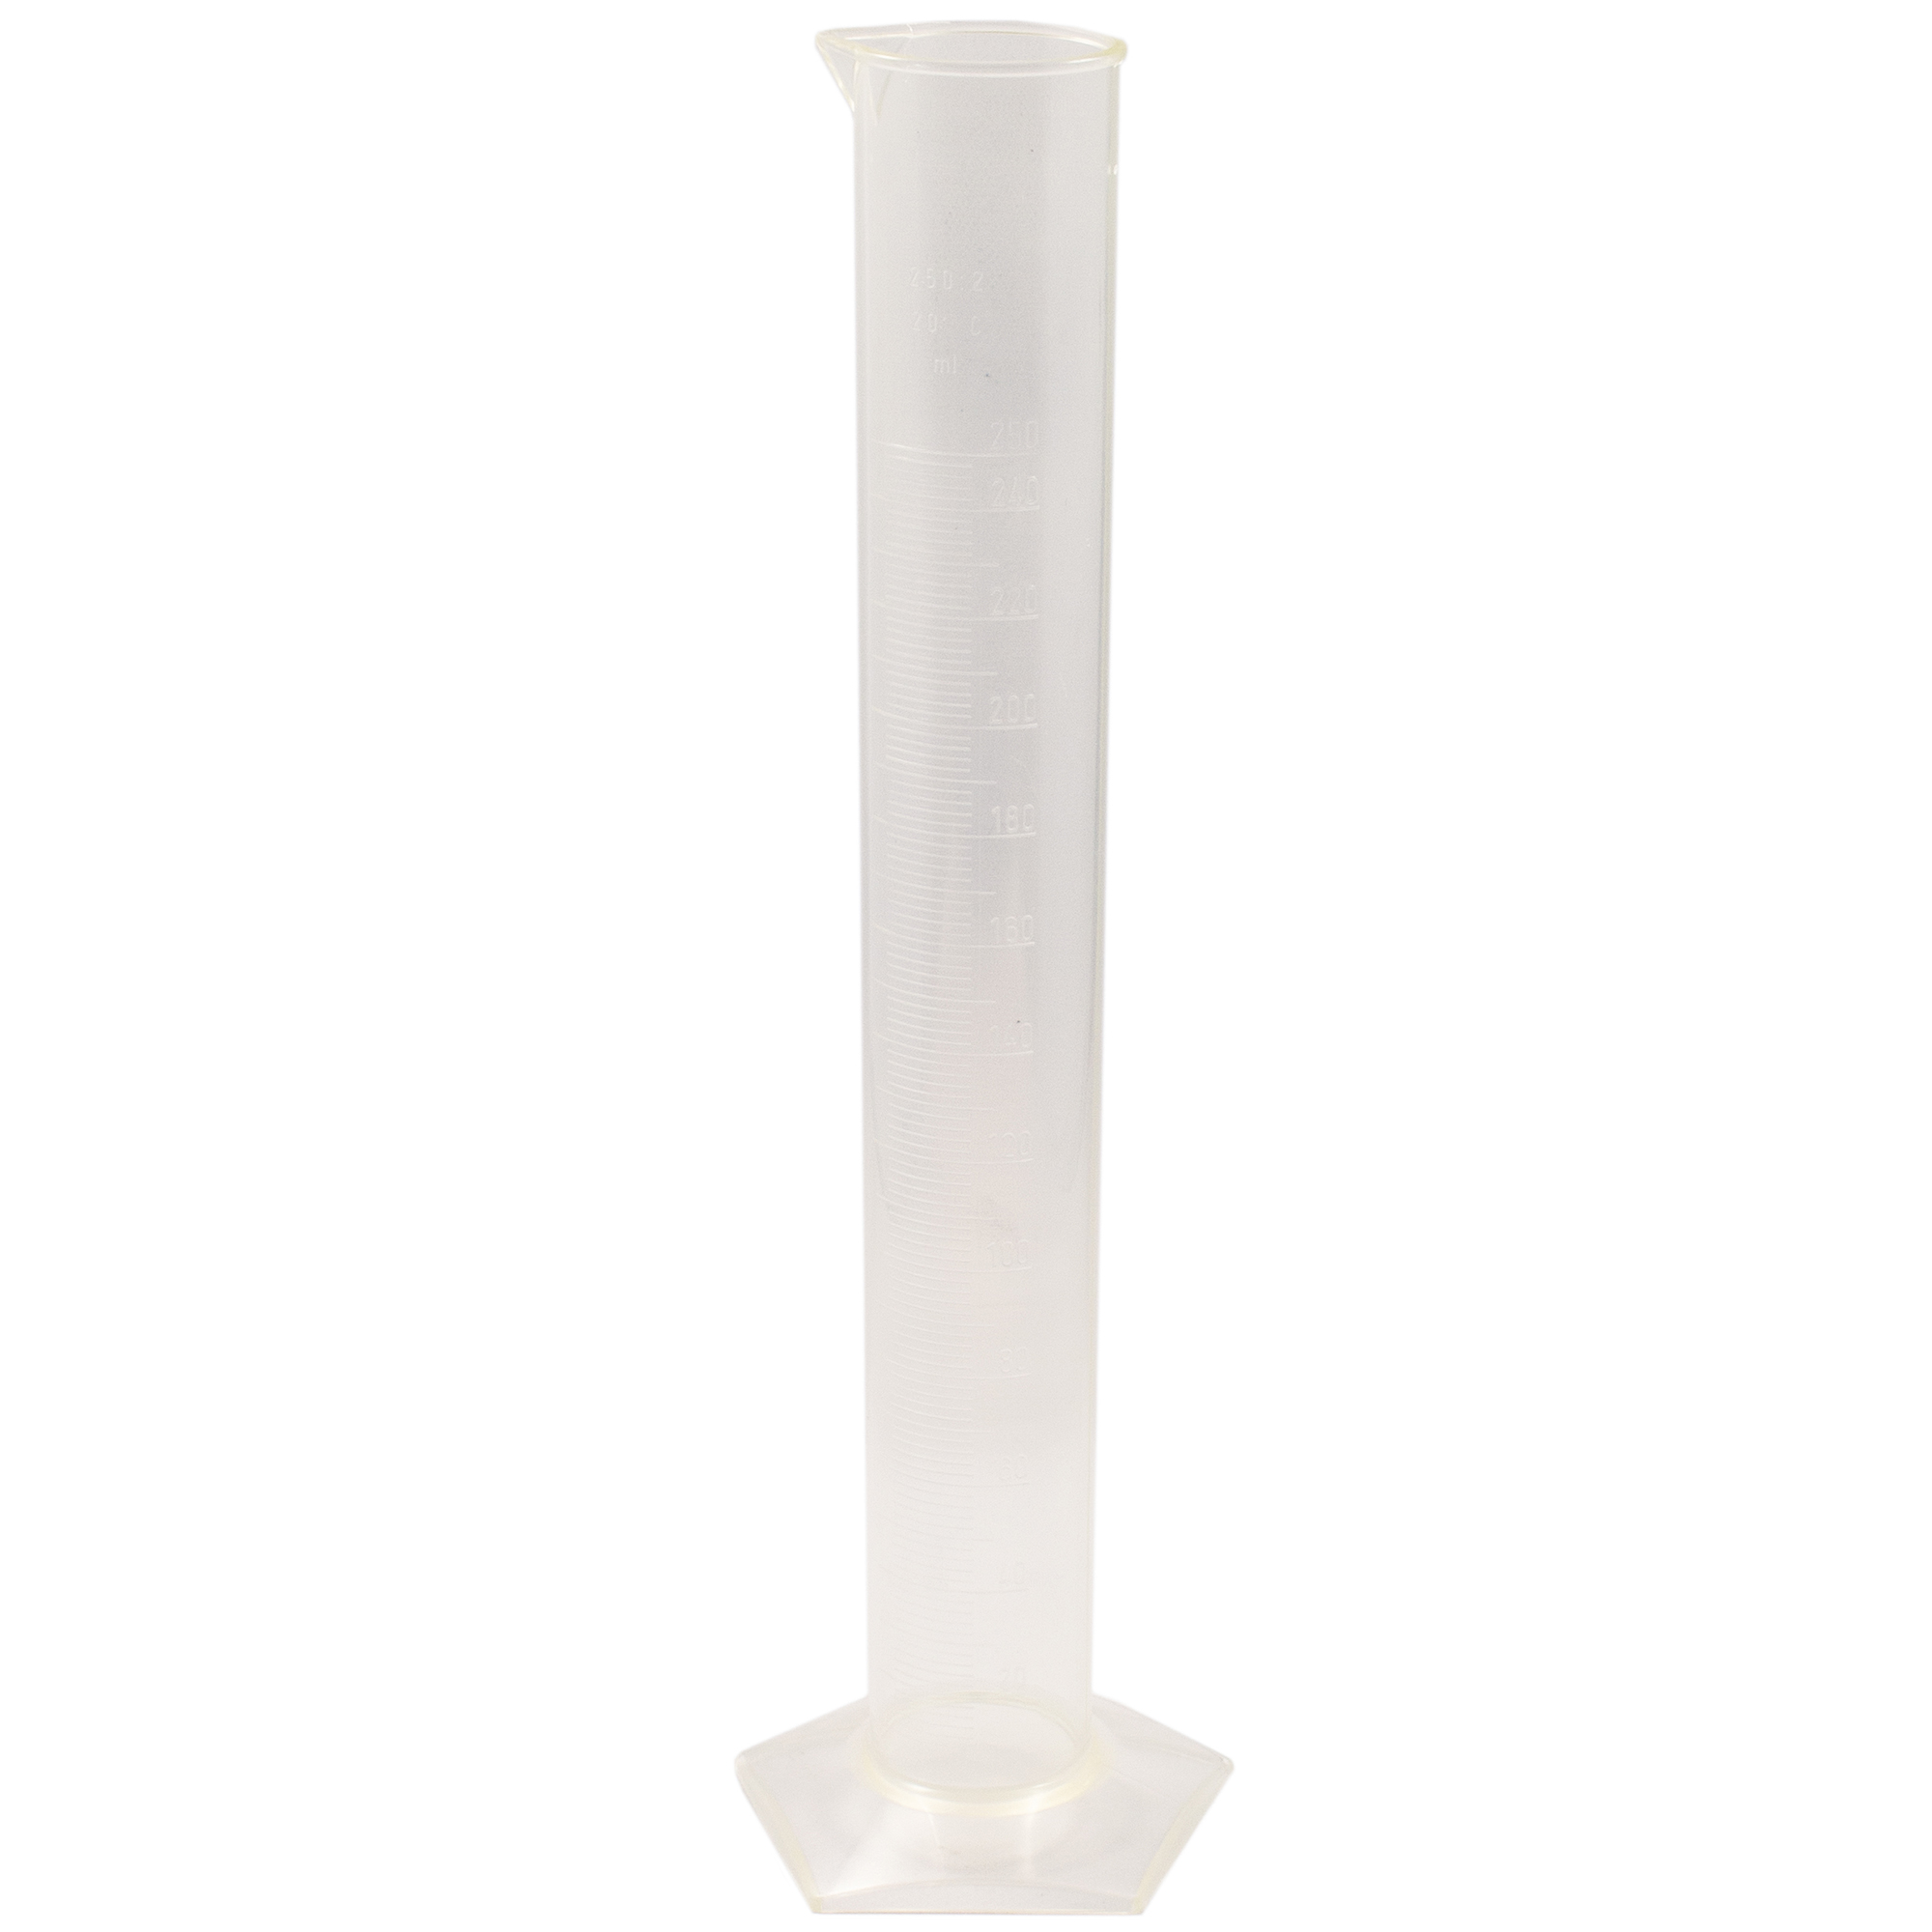 Measuring cylinder plastic (tpx) - 50ml